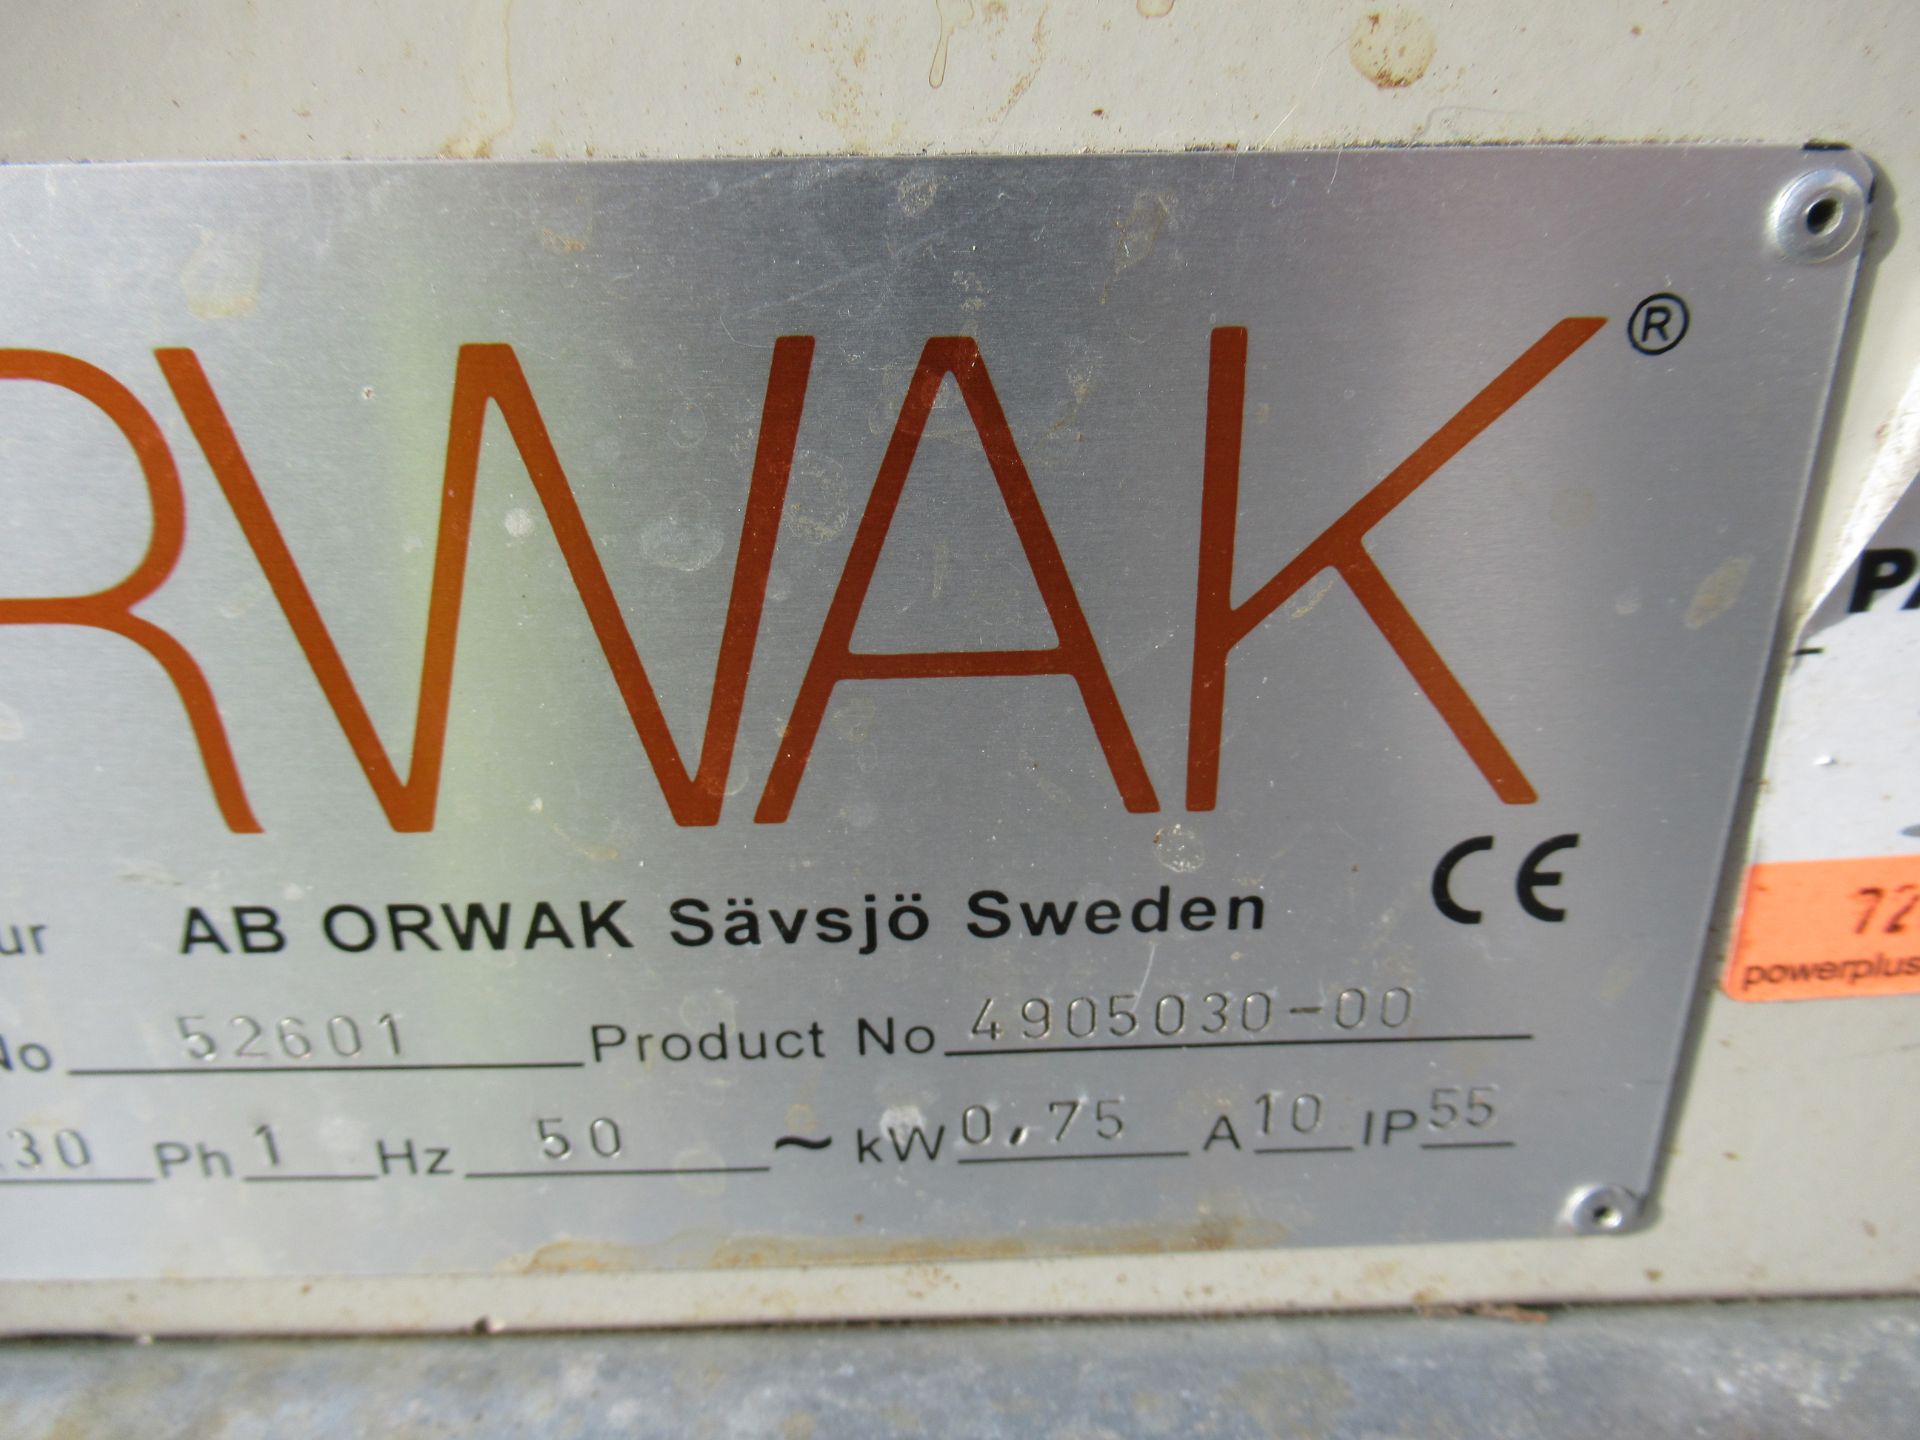 Orwak 5030B Compactor - Image 6 of 6